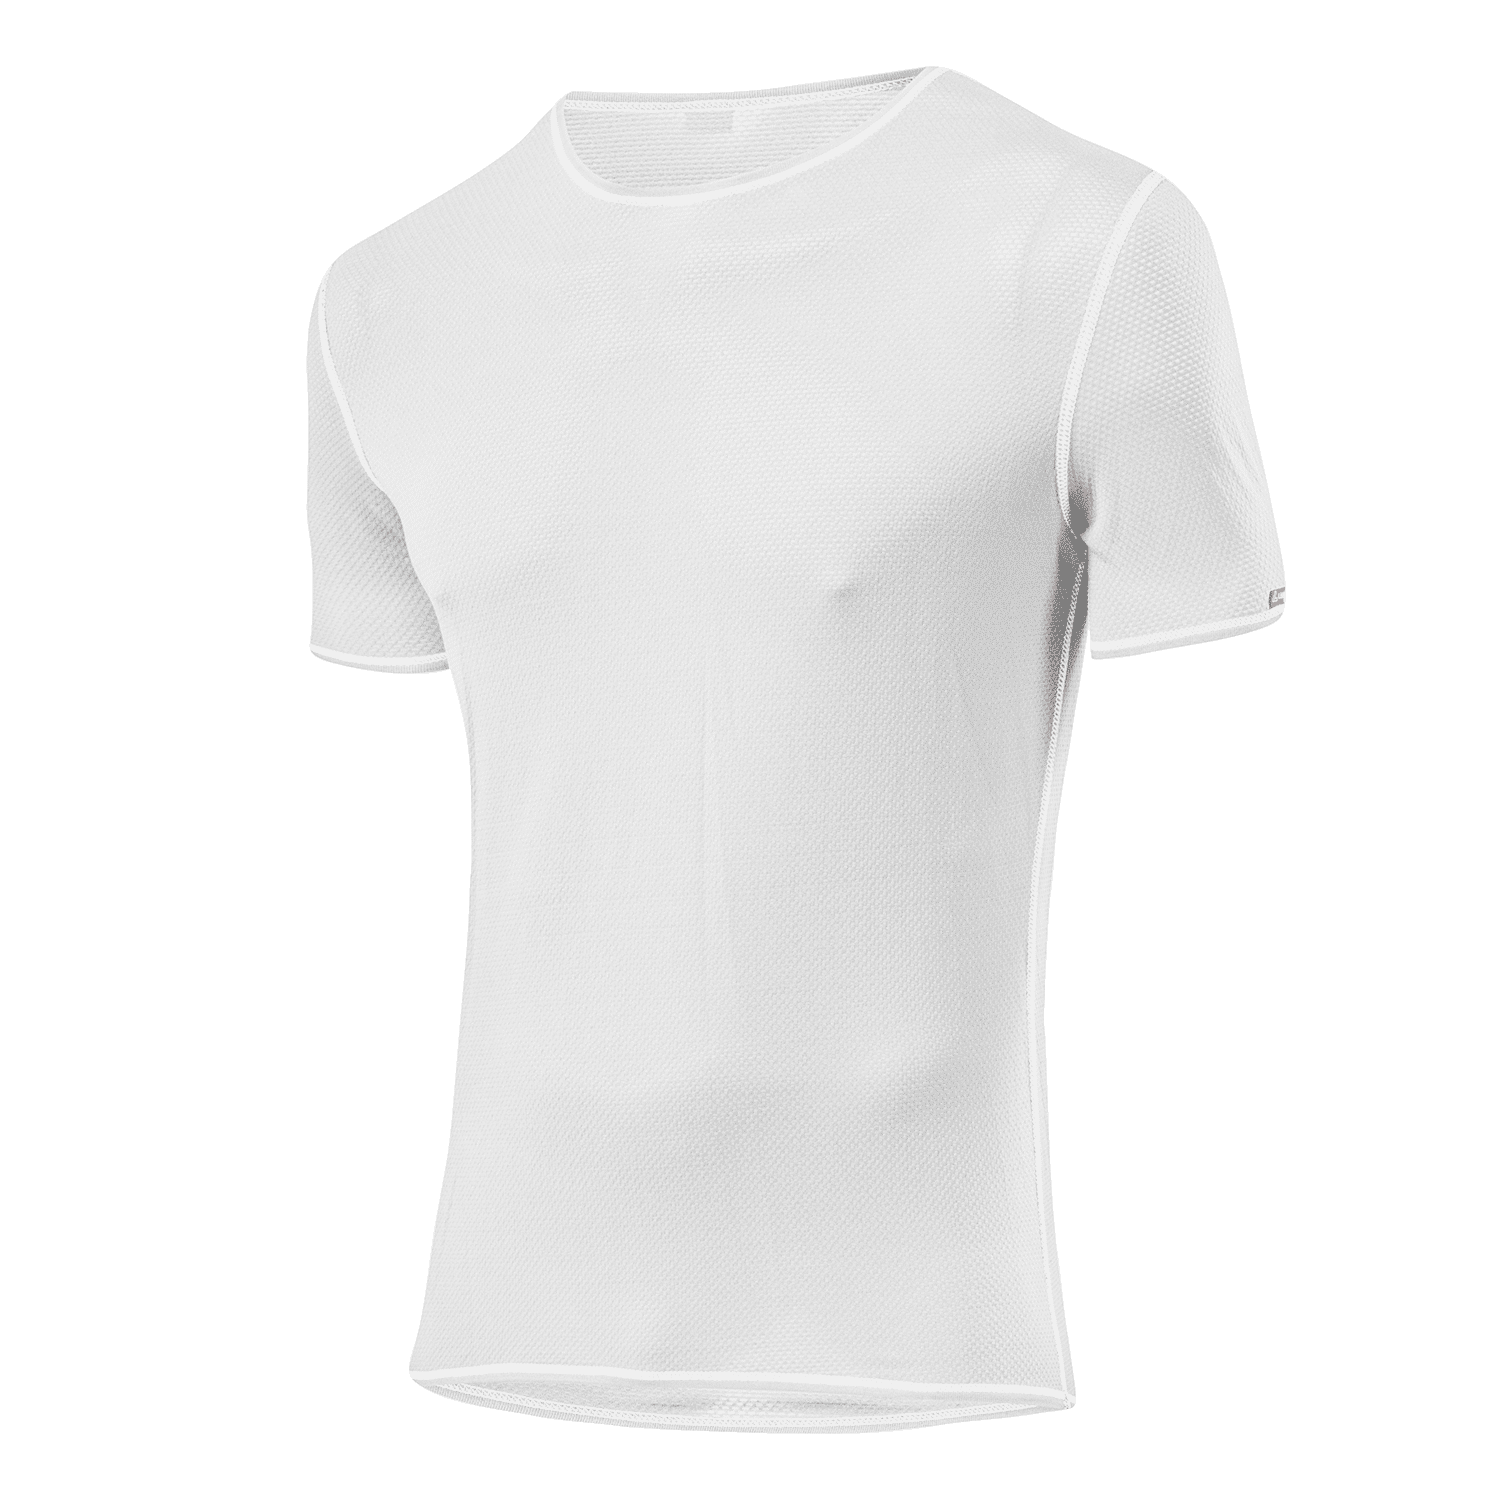 Löffler Shirt S/S Transtex Light - Base layer - Men's